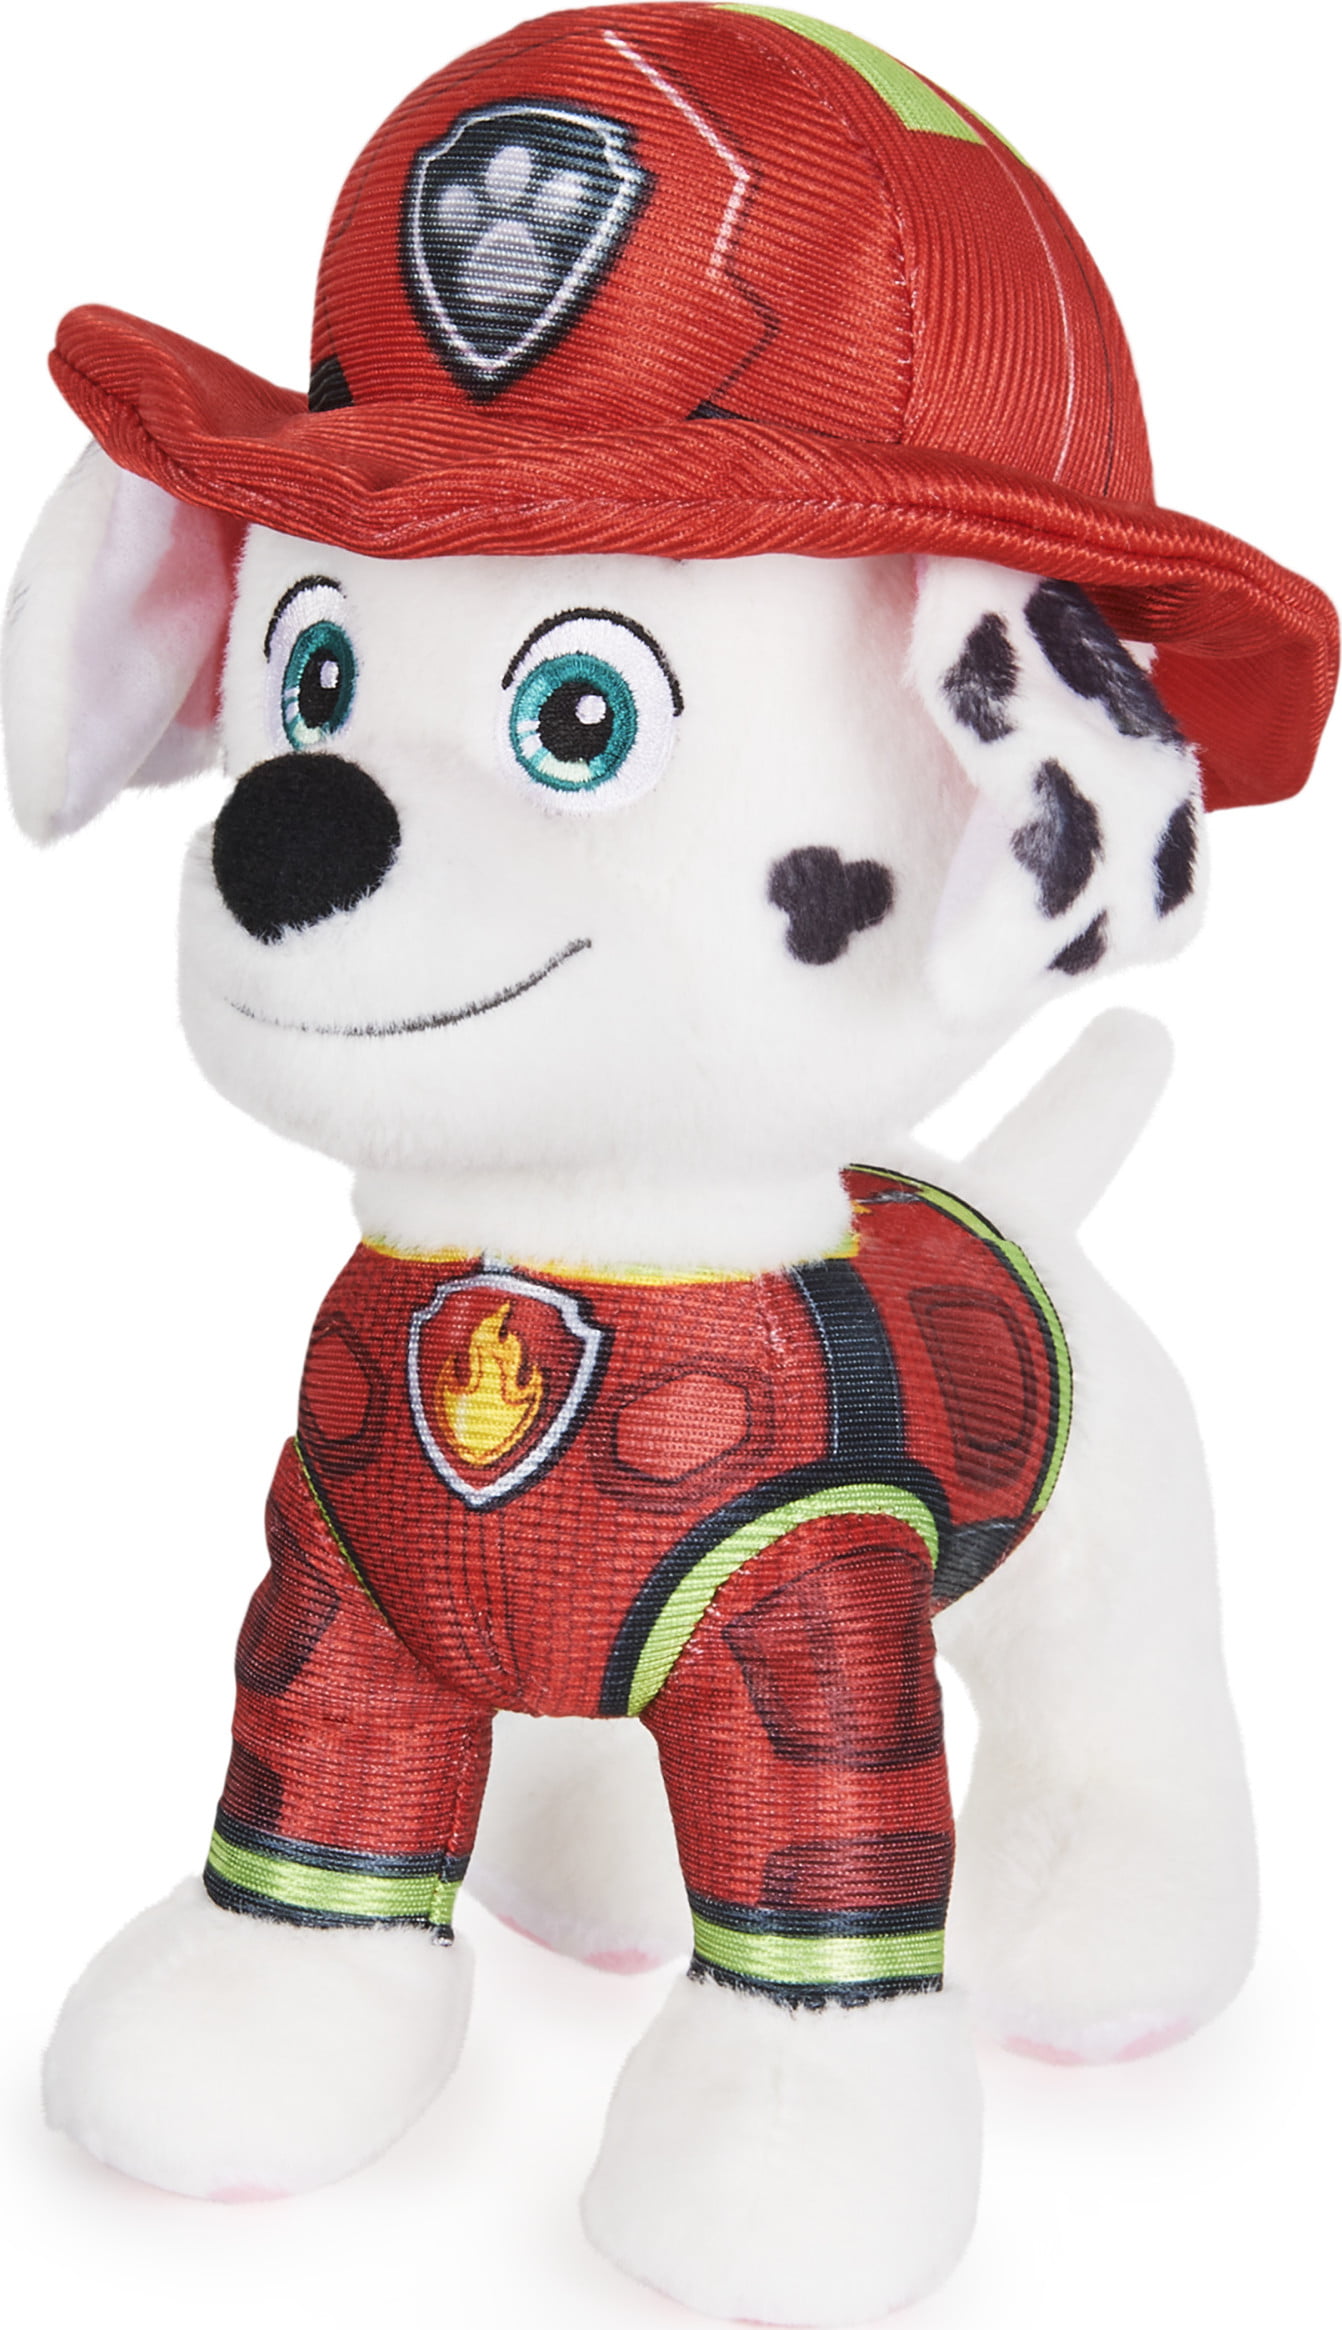 Xlarge New Paw Patrol Plush Stuffed Animal Toy Pup Marshall 13''.USA.Licensed.